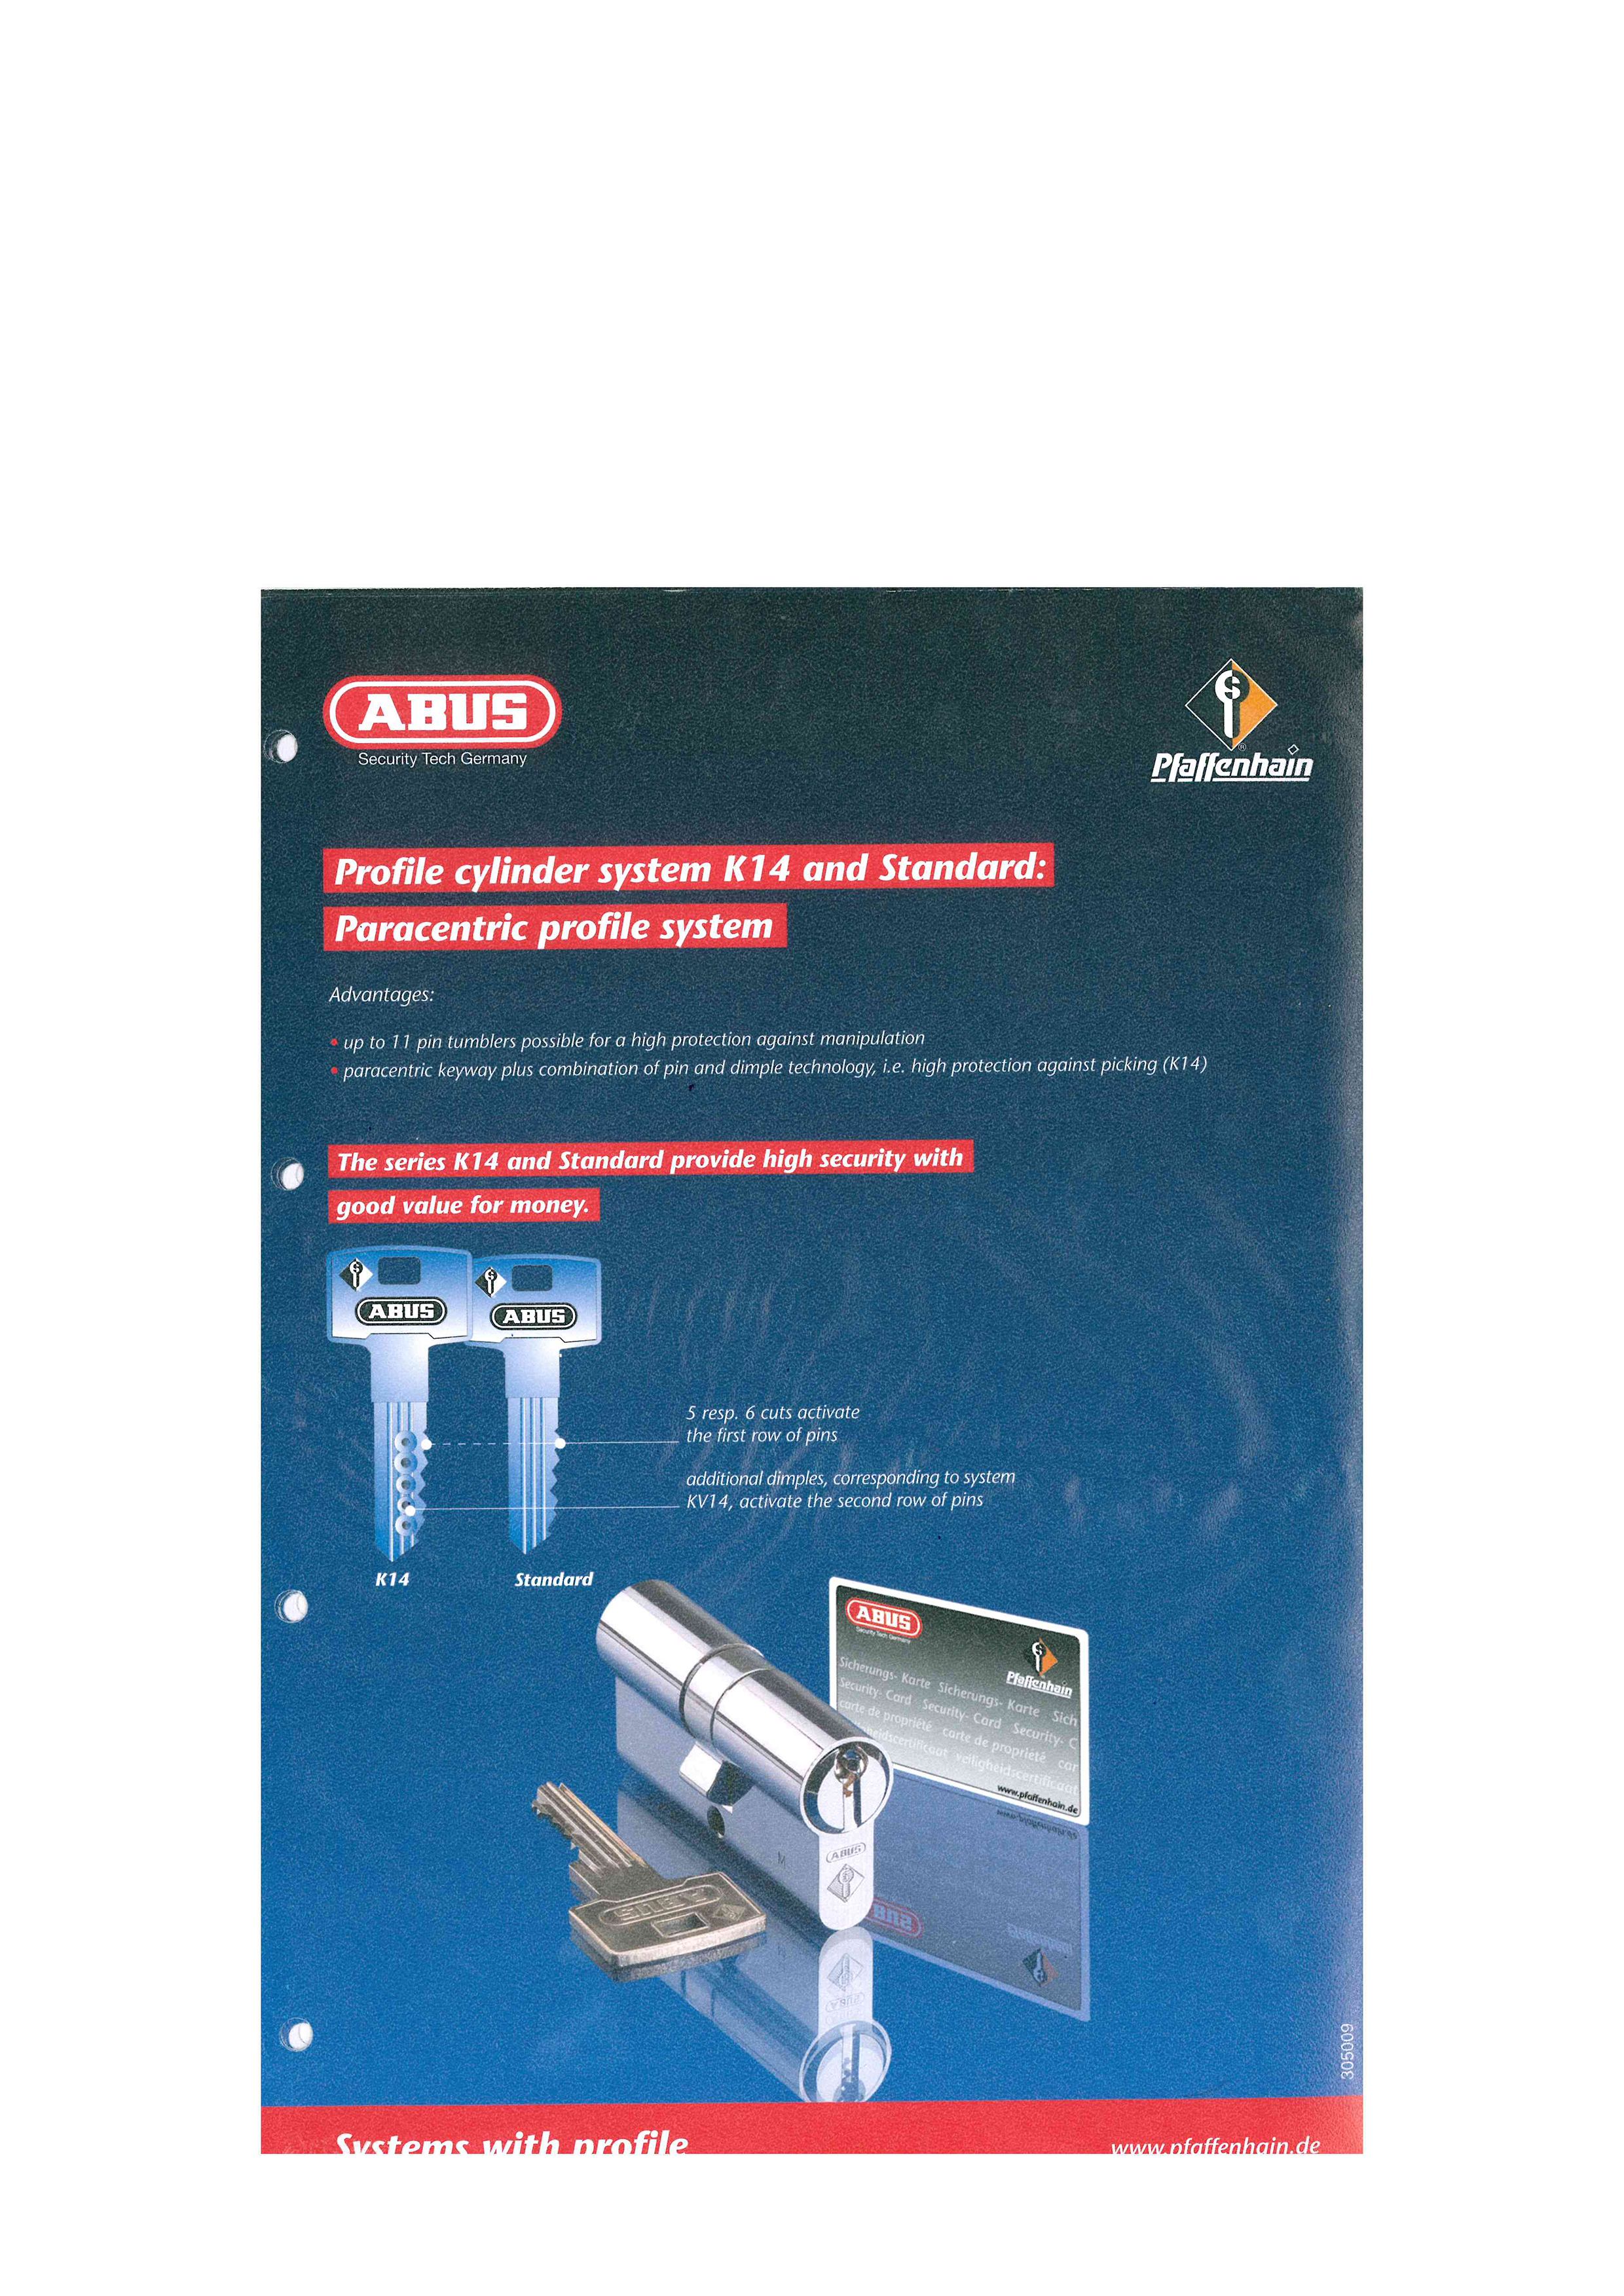 Gammel brochure for en cylinderprofil fra Pfaffenheim © ABUS